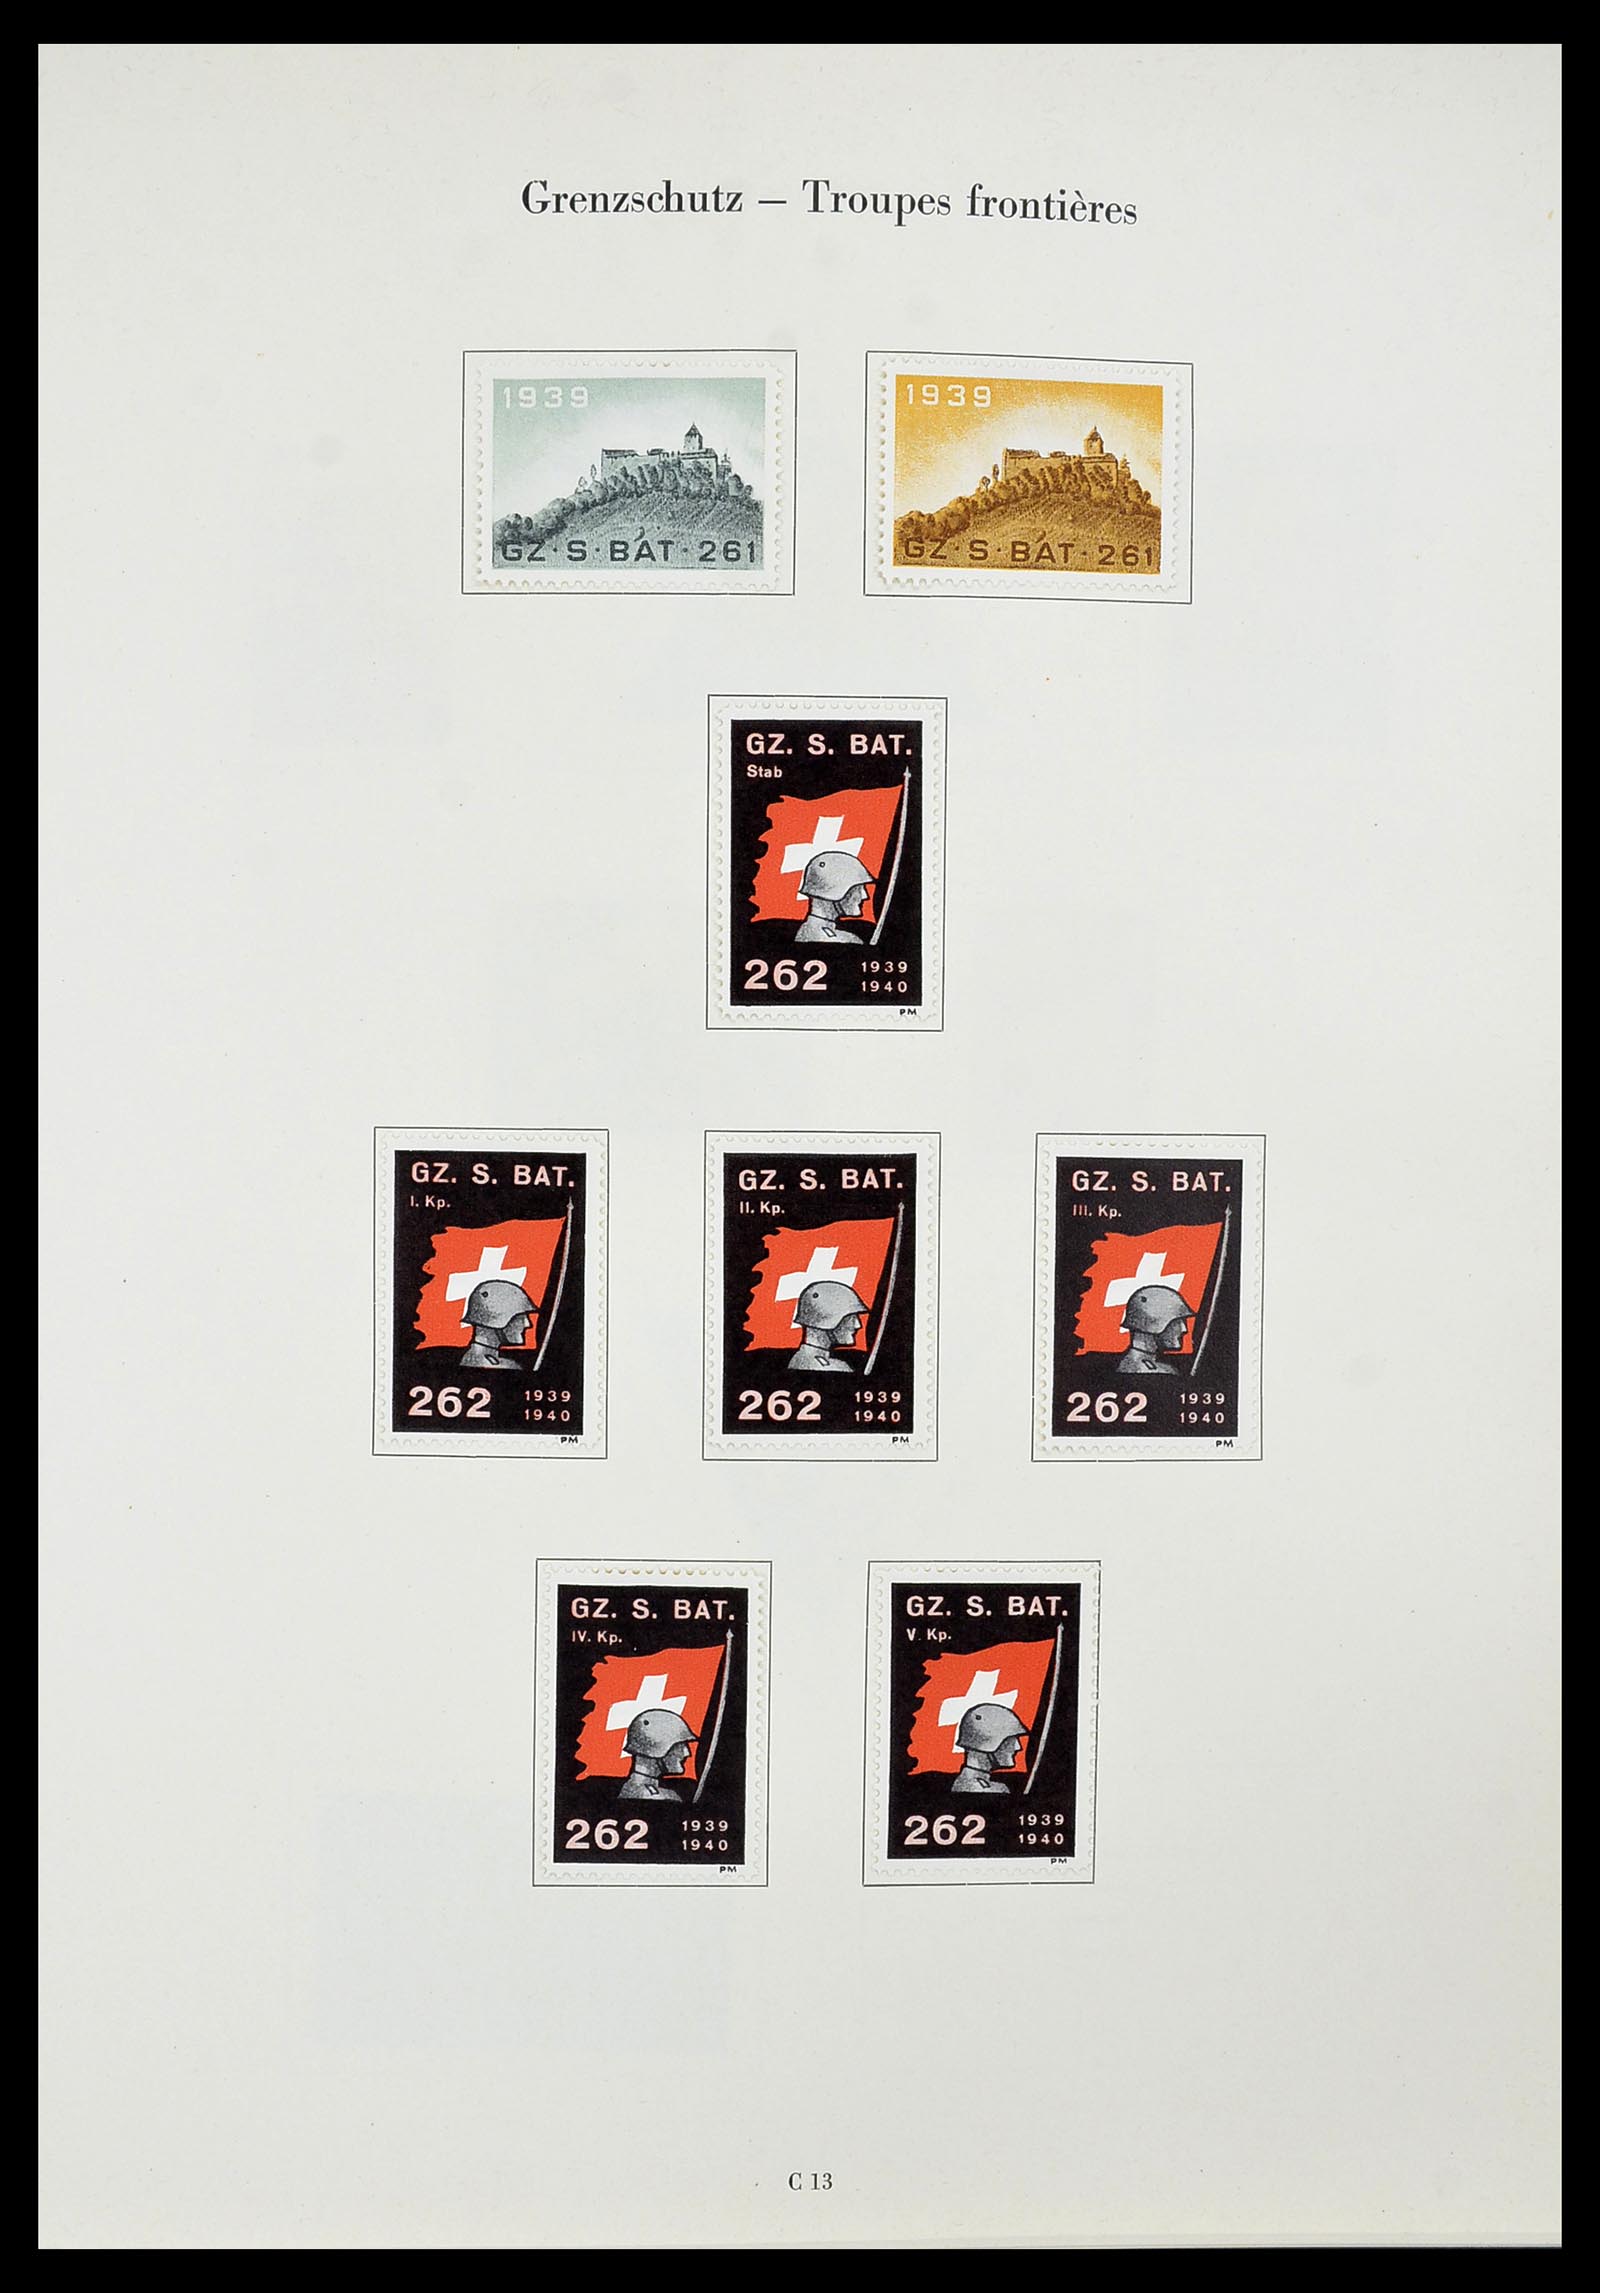 34234 098 - Stamp collection 34234 Switzerland soldier stamps 1939-1945.